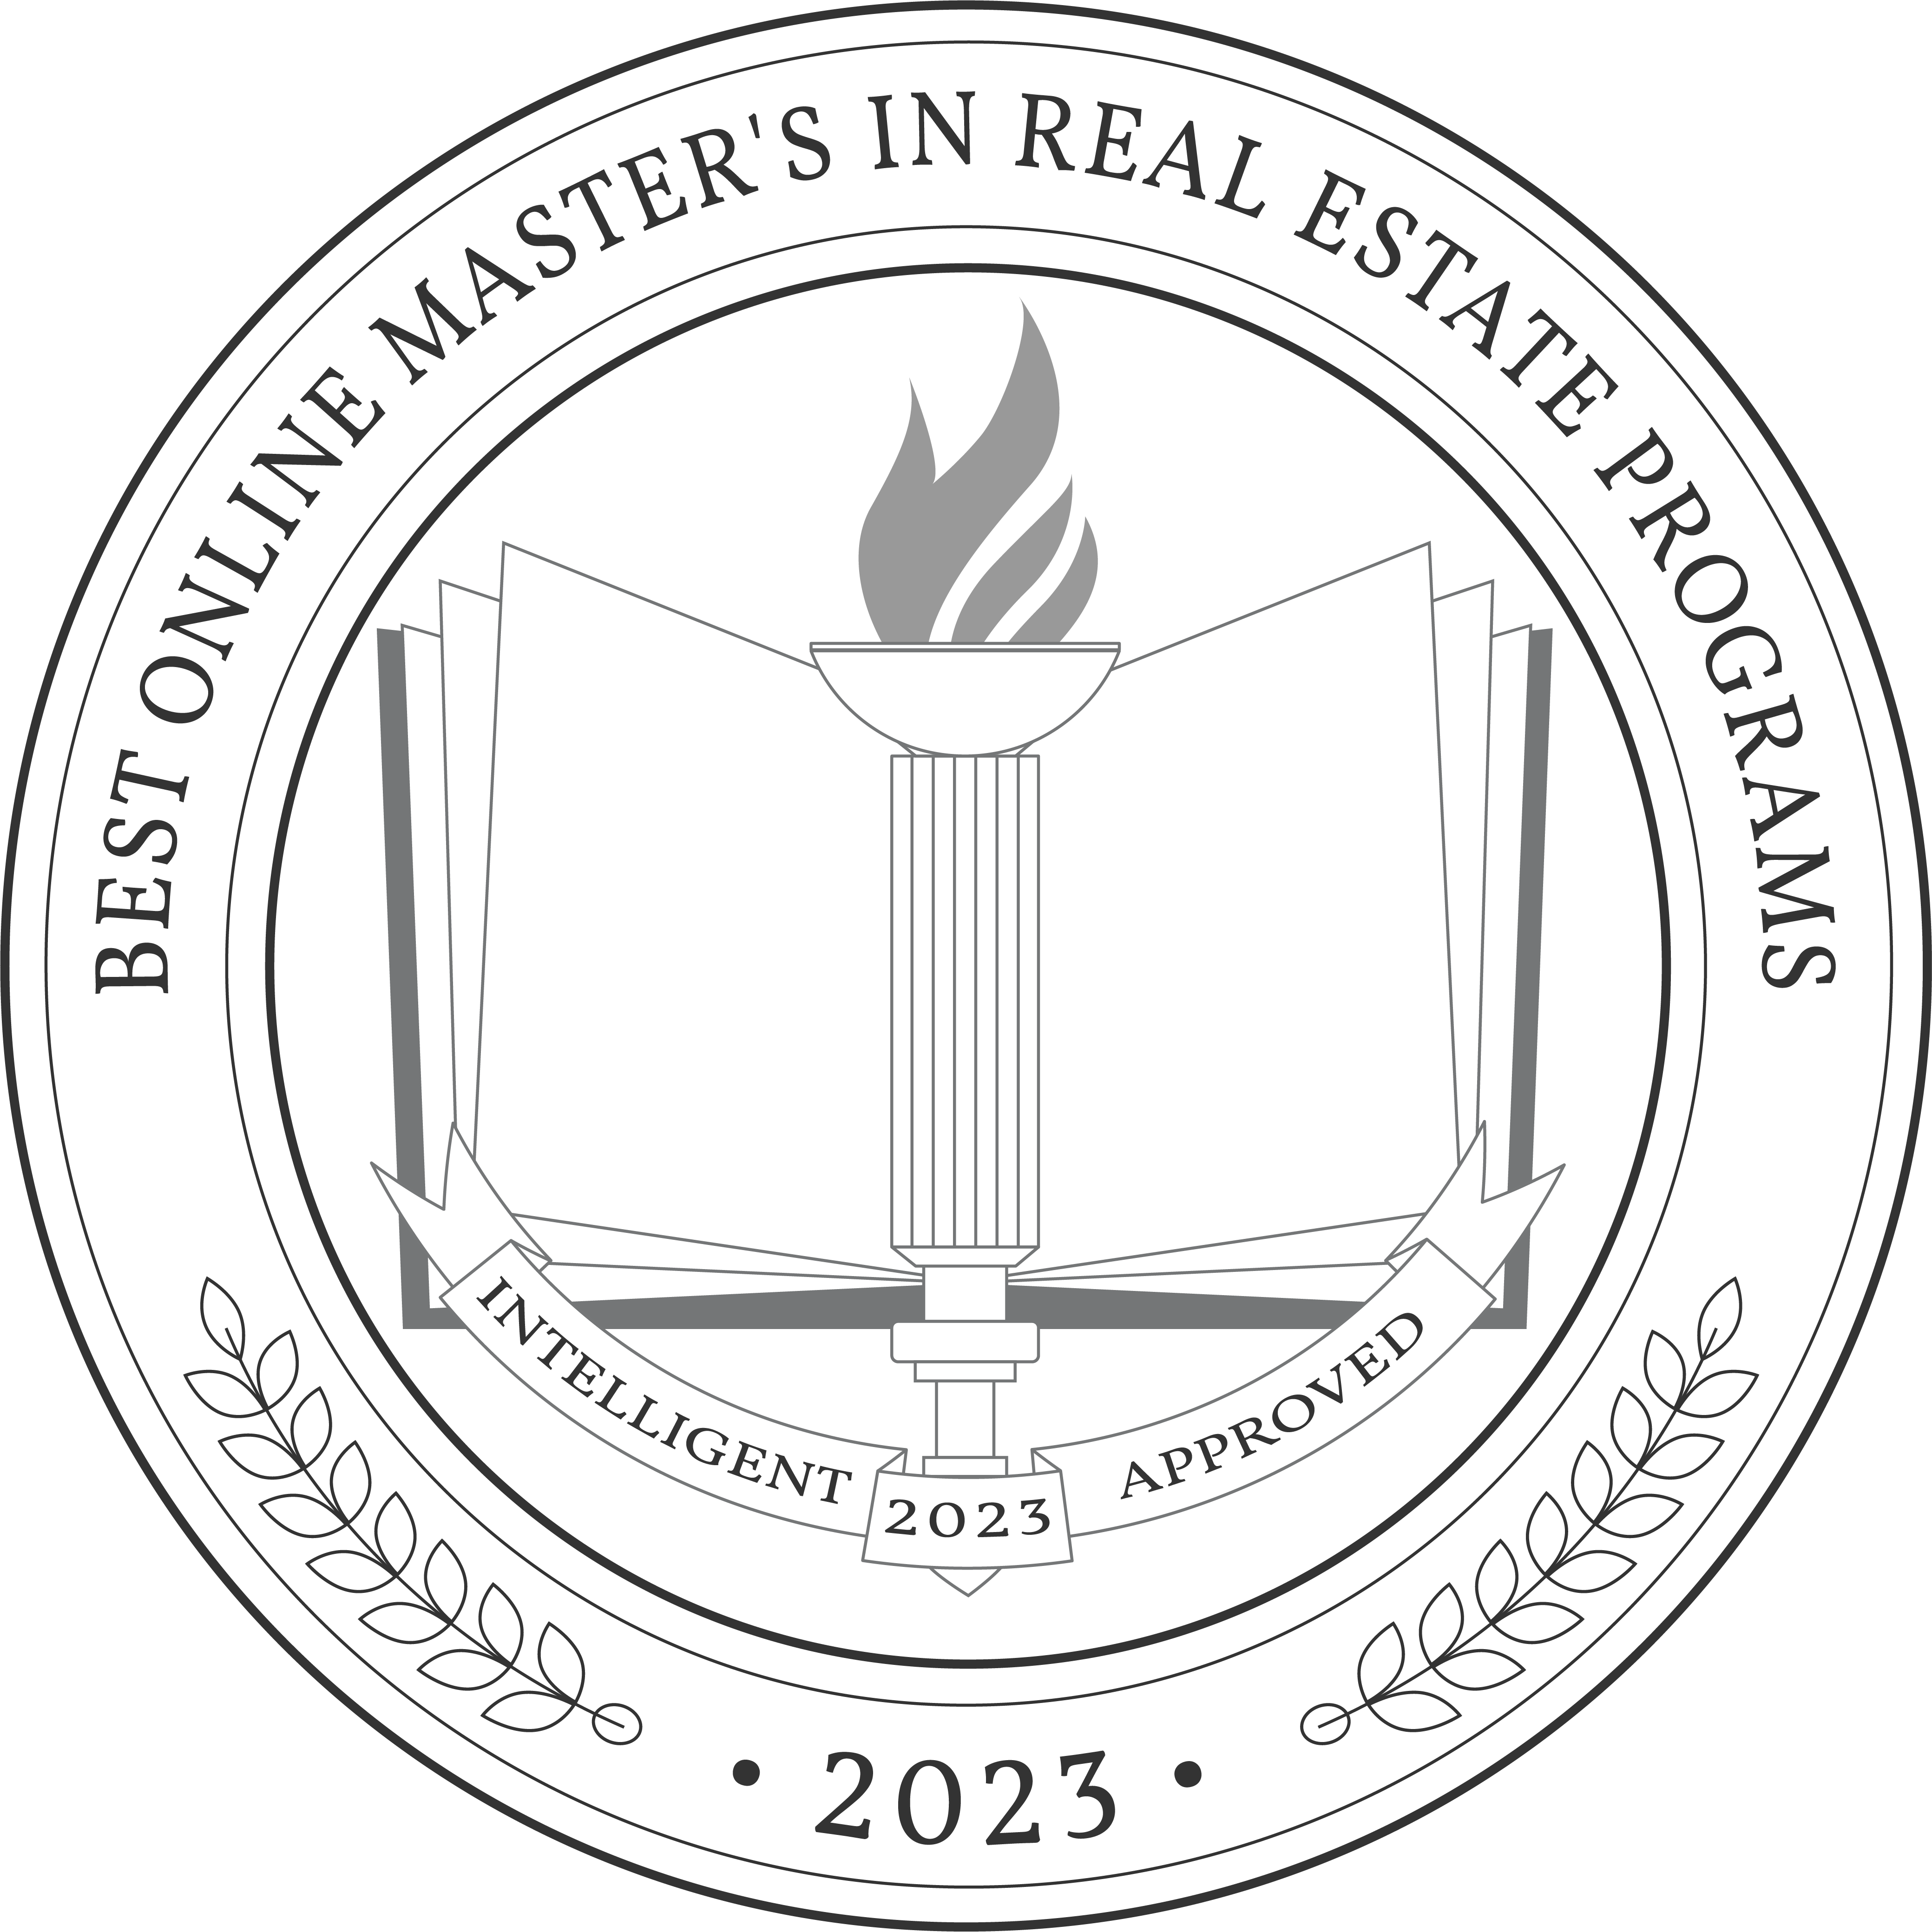 Best Online Master's in Real Estate Programs badge